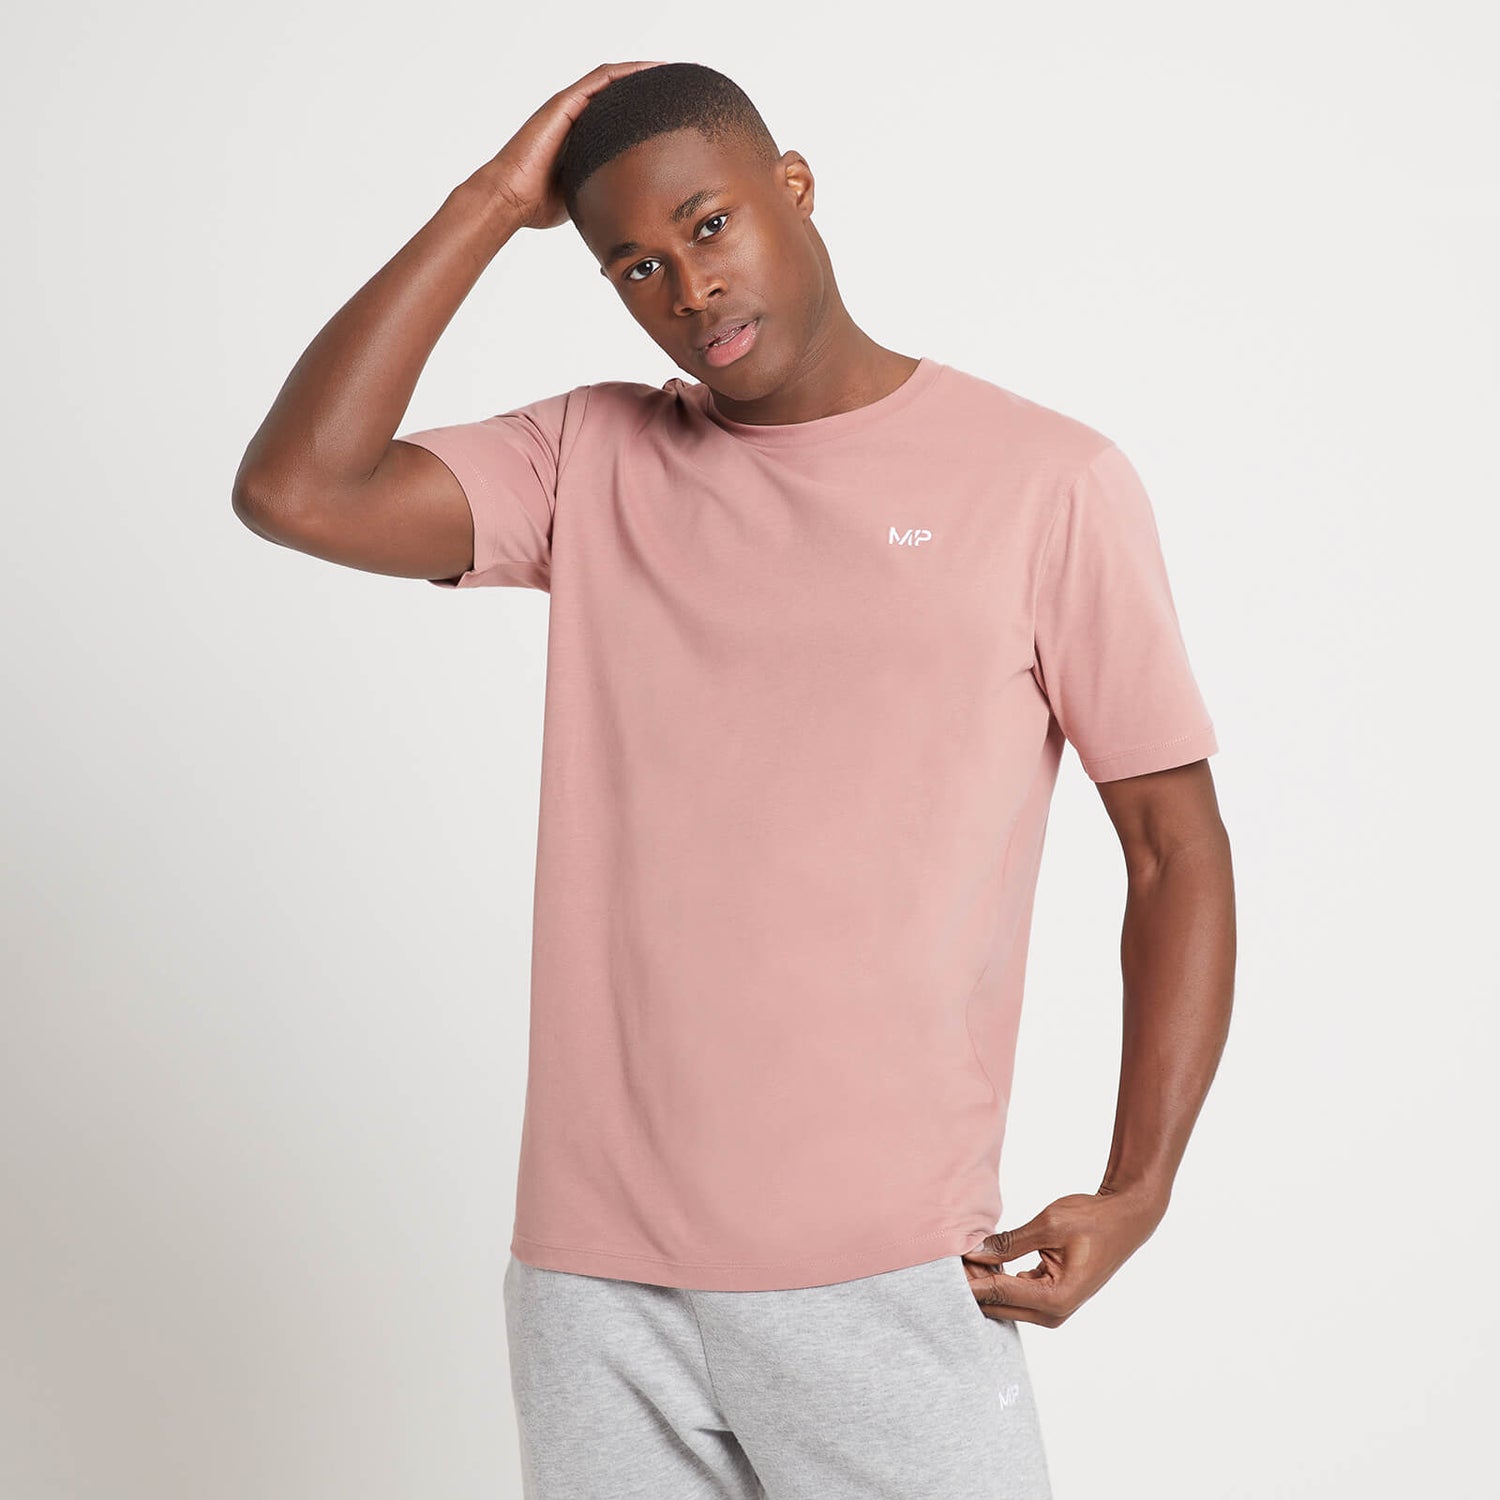 MP 남성용 에센셜 티셔츠 - 워시드 핑크 - XXS